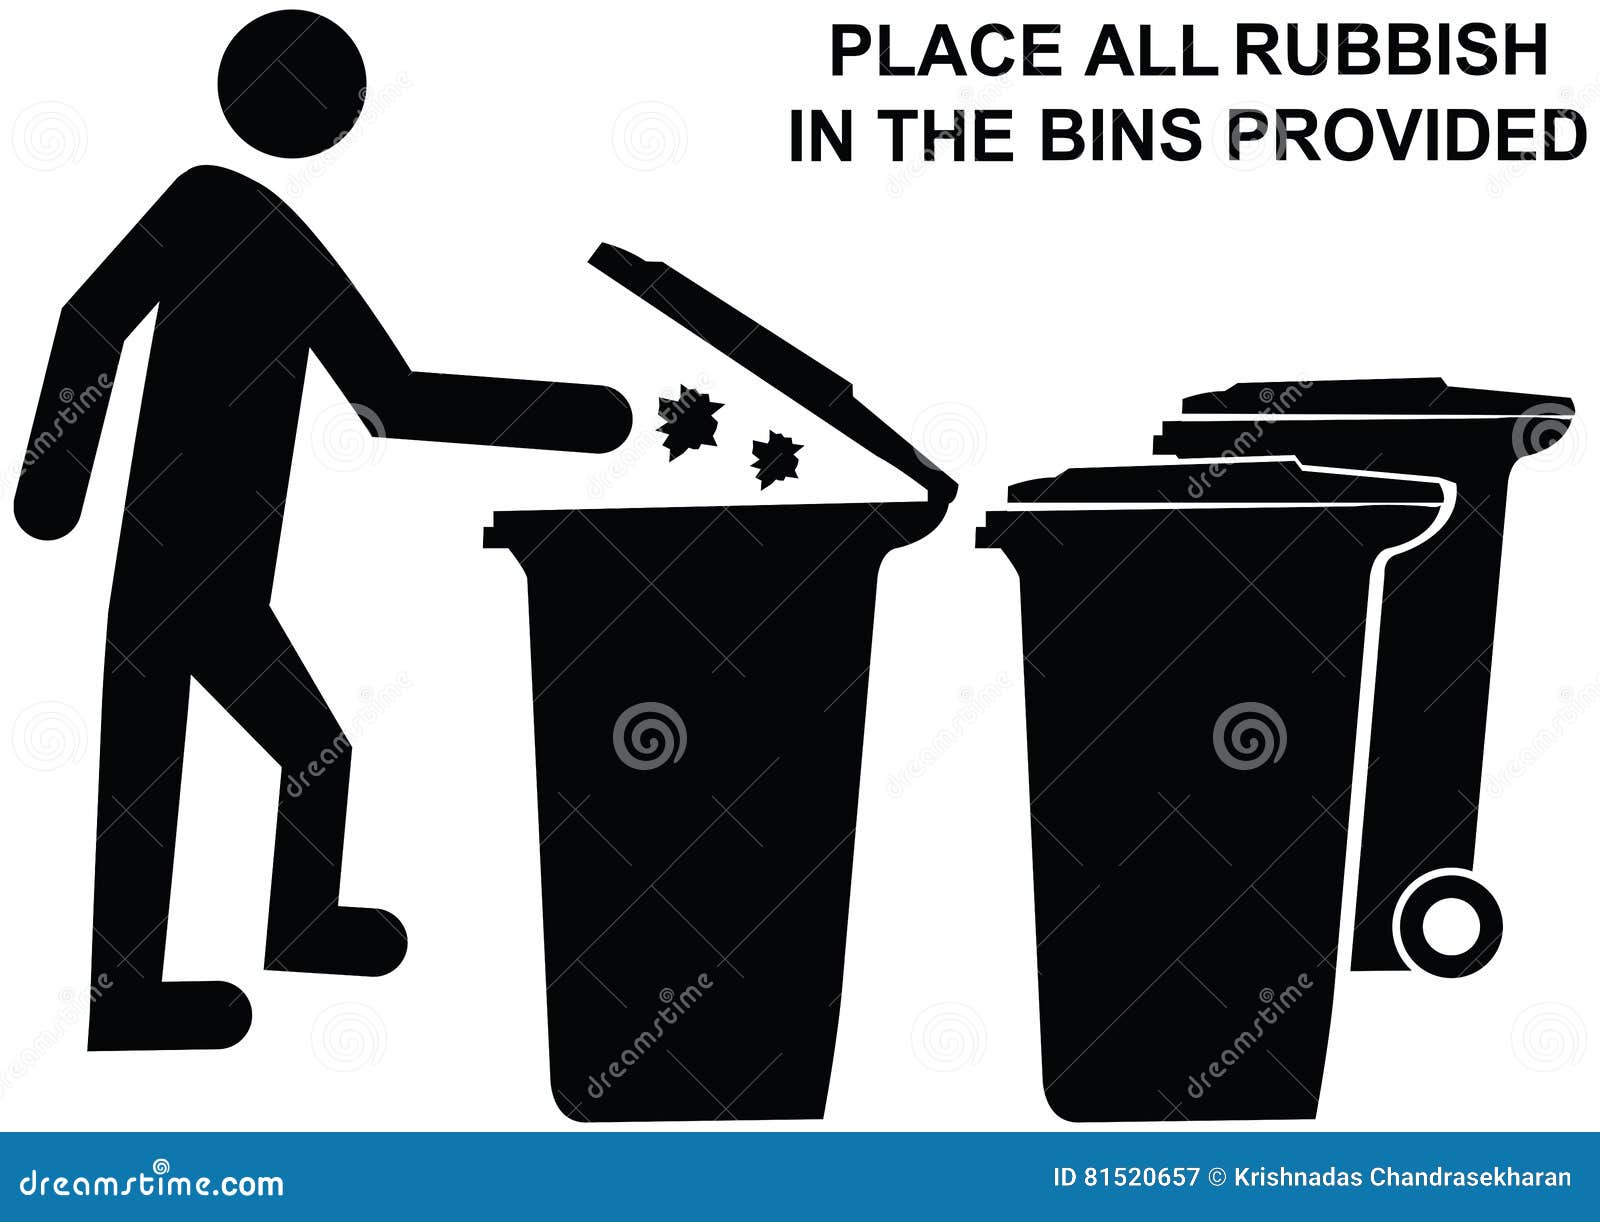 Не подбирайте из мусорного ведра новелла. Значок мусорного бака. Табличка мусорное ведро.